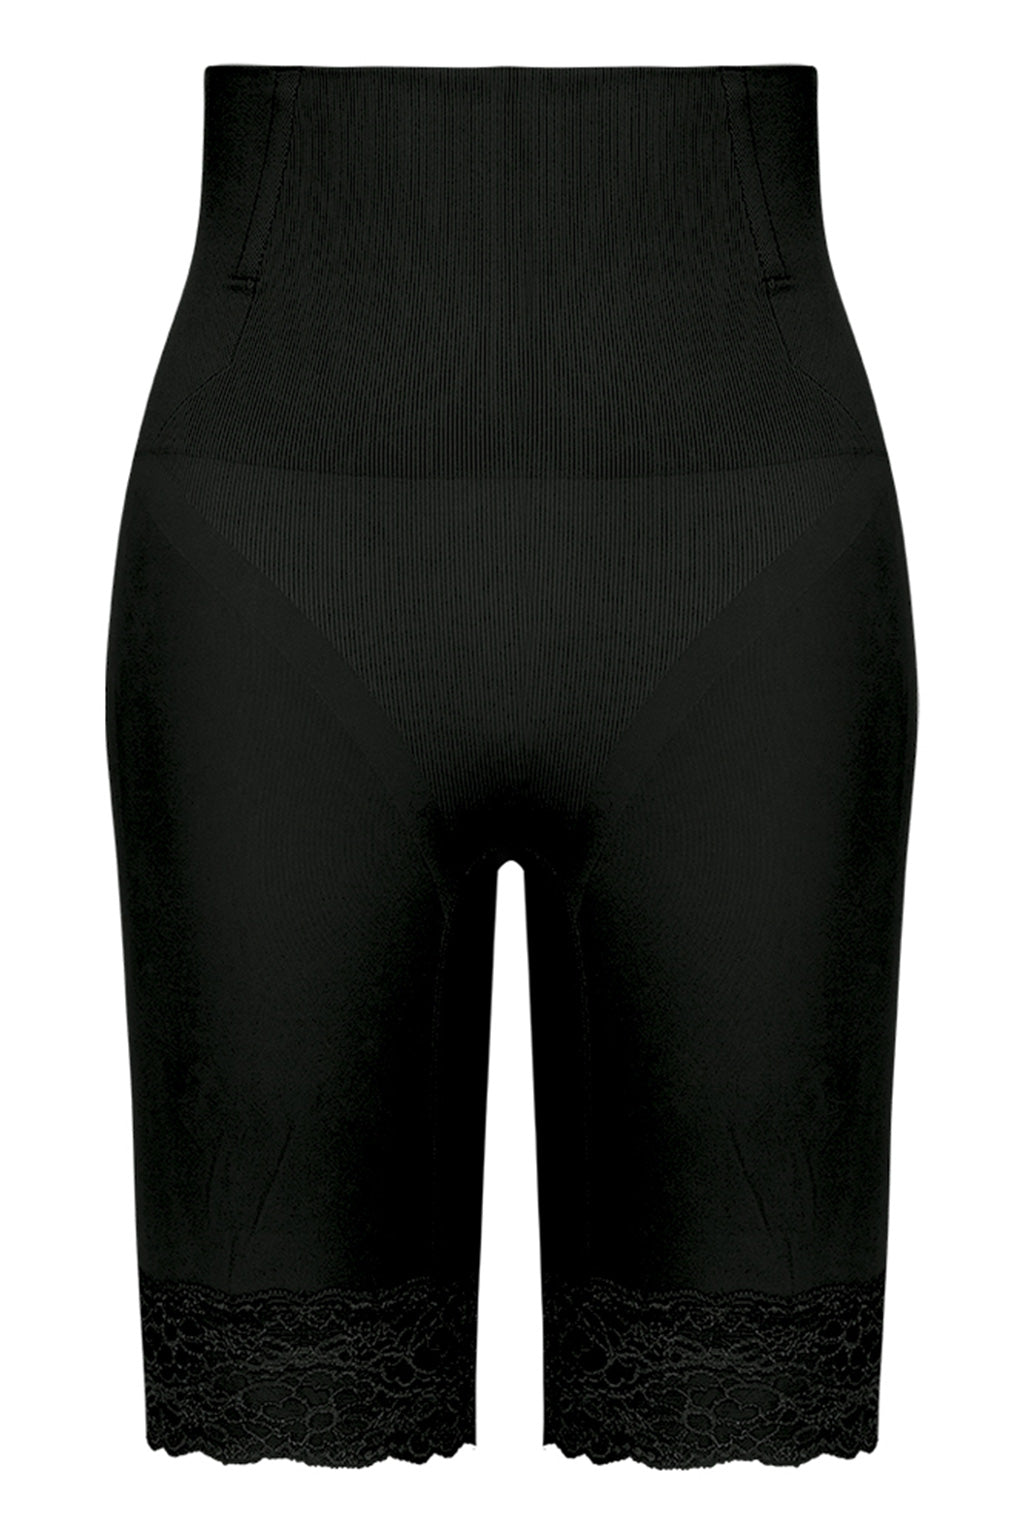 Conturve Black High Waisted Shapewear Pants - Black - Size XL/2XL